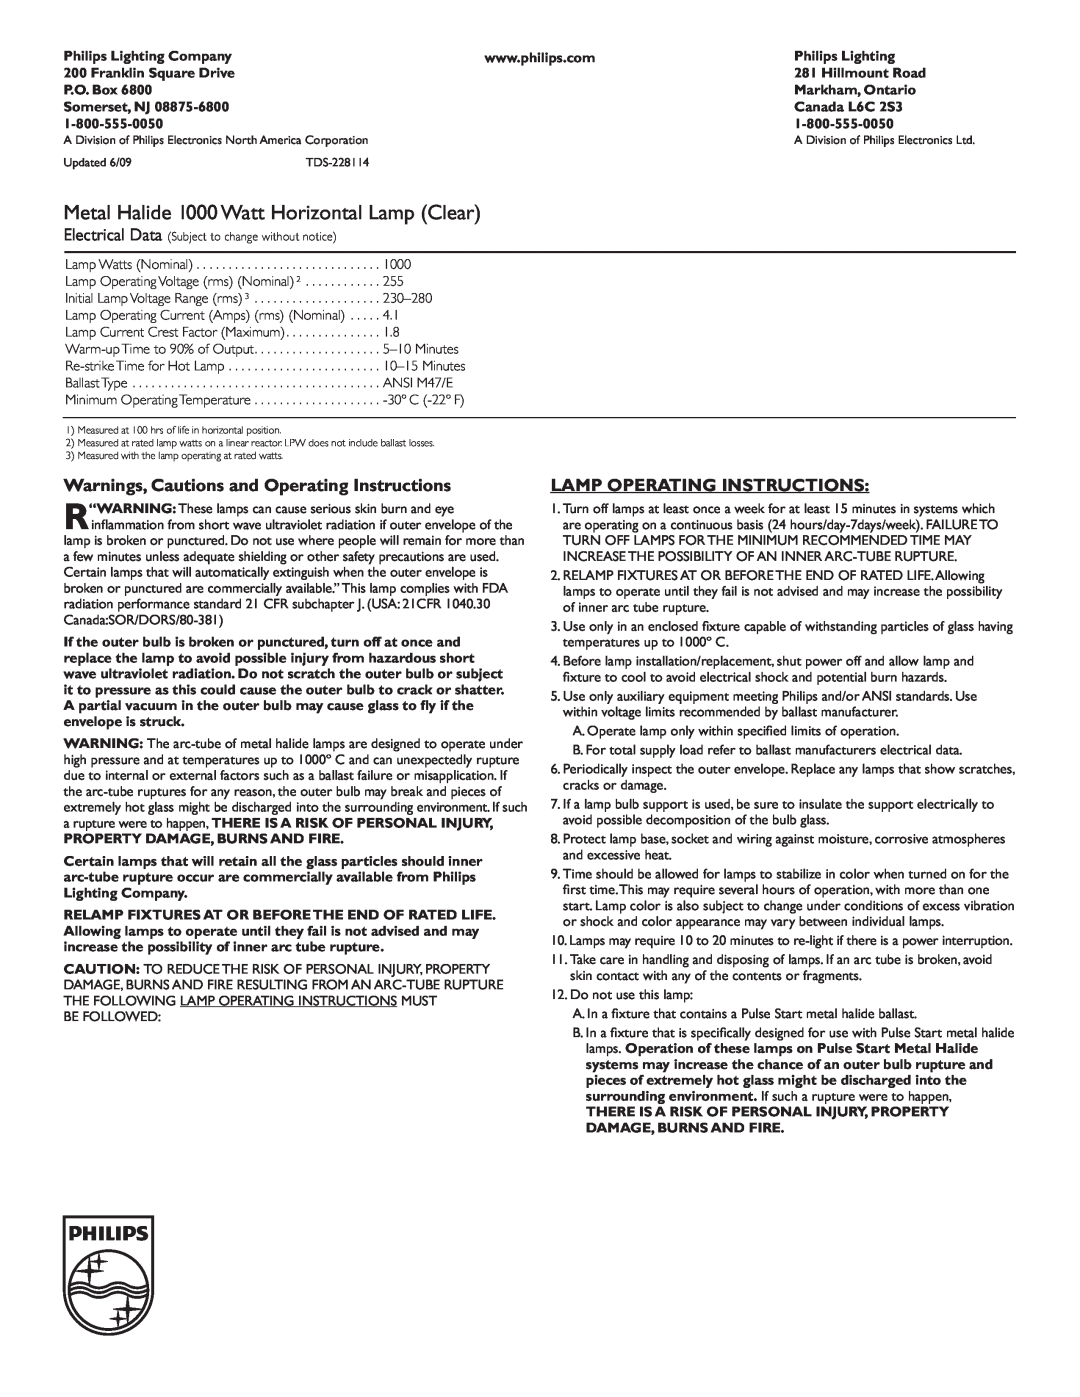 Philips 228114 manual Metal Halide 1000 Watt Horizontal Lamp Clear, Warnings, Cautions and Operating Instructions 